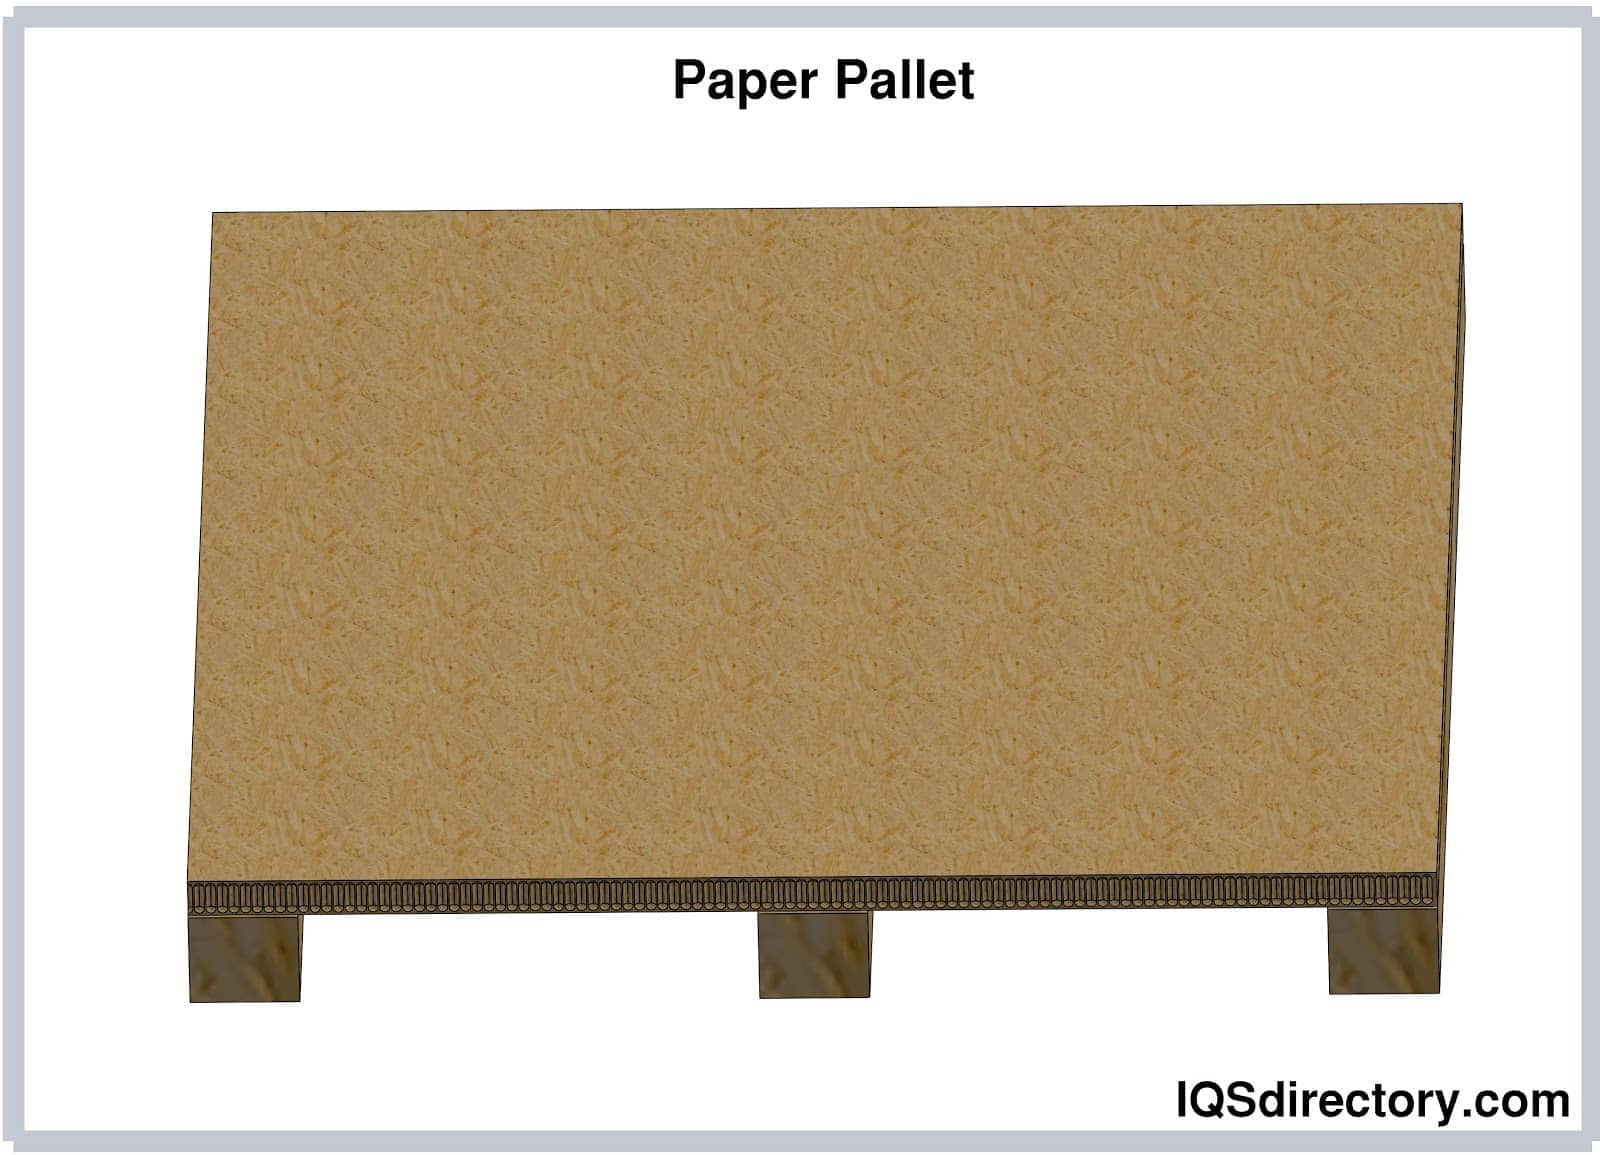 Paper Pallet